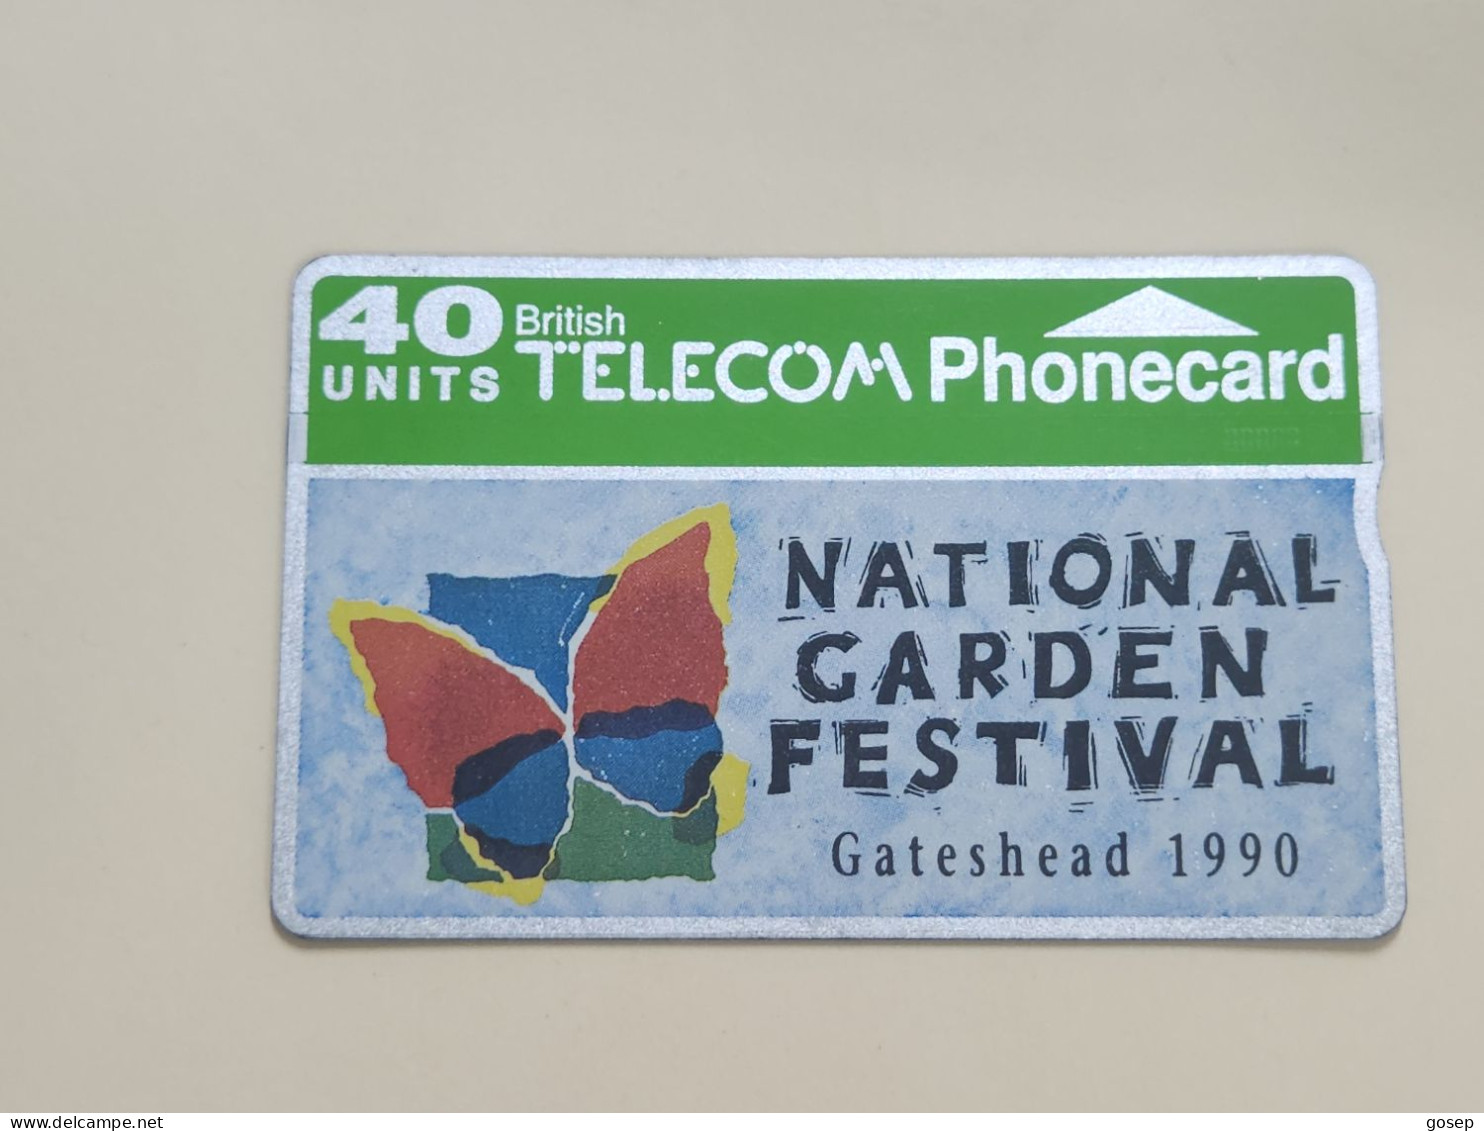 United Kingdom-(BTC015)-GATESHEAD Garden Festival(306)(40units)(041C18475)price Cataloge 6.00£ Used+1card Prepiad Free - BT Edición Conmemorativa